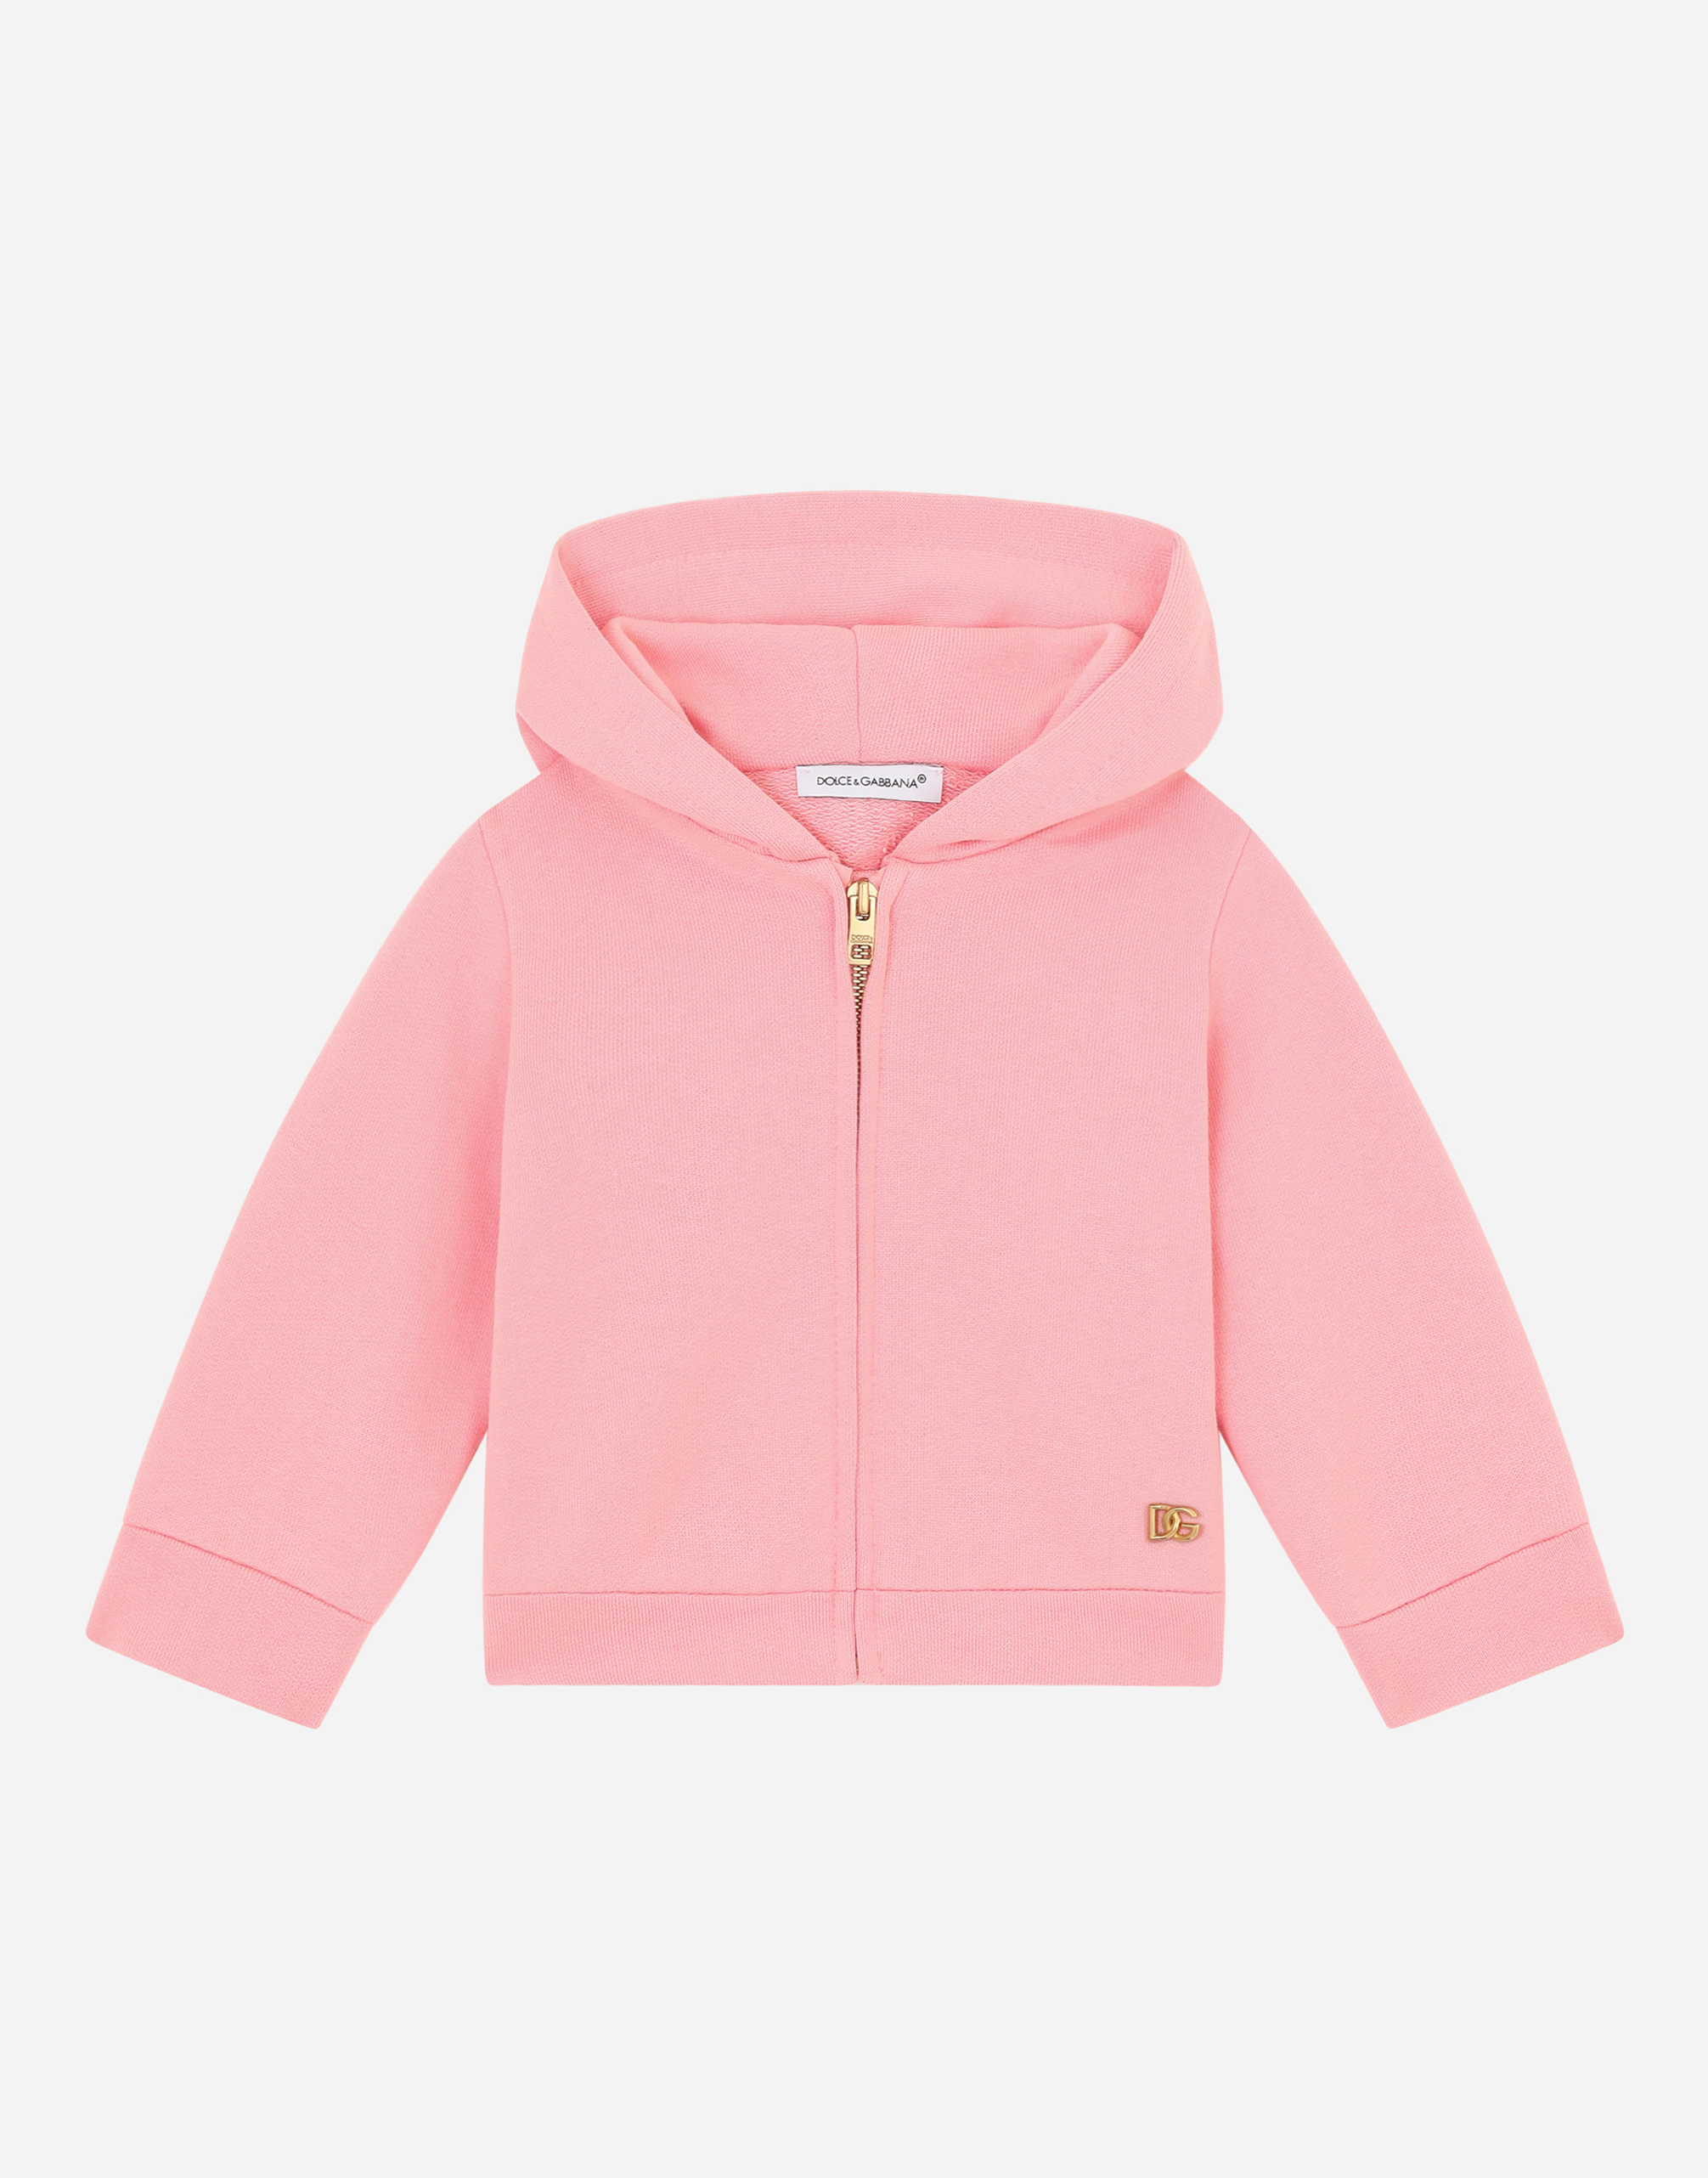 Jersey hoodie with metal DG logo in Pink